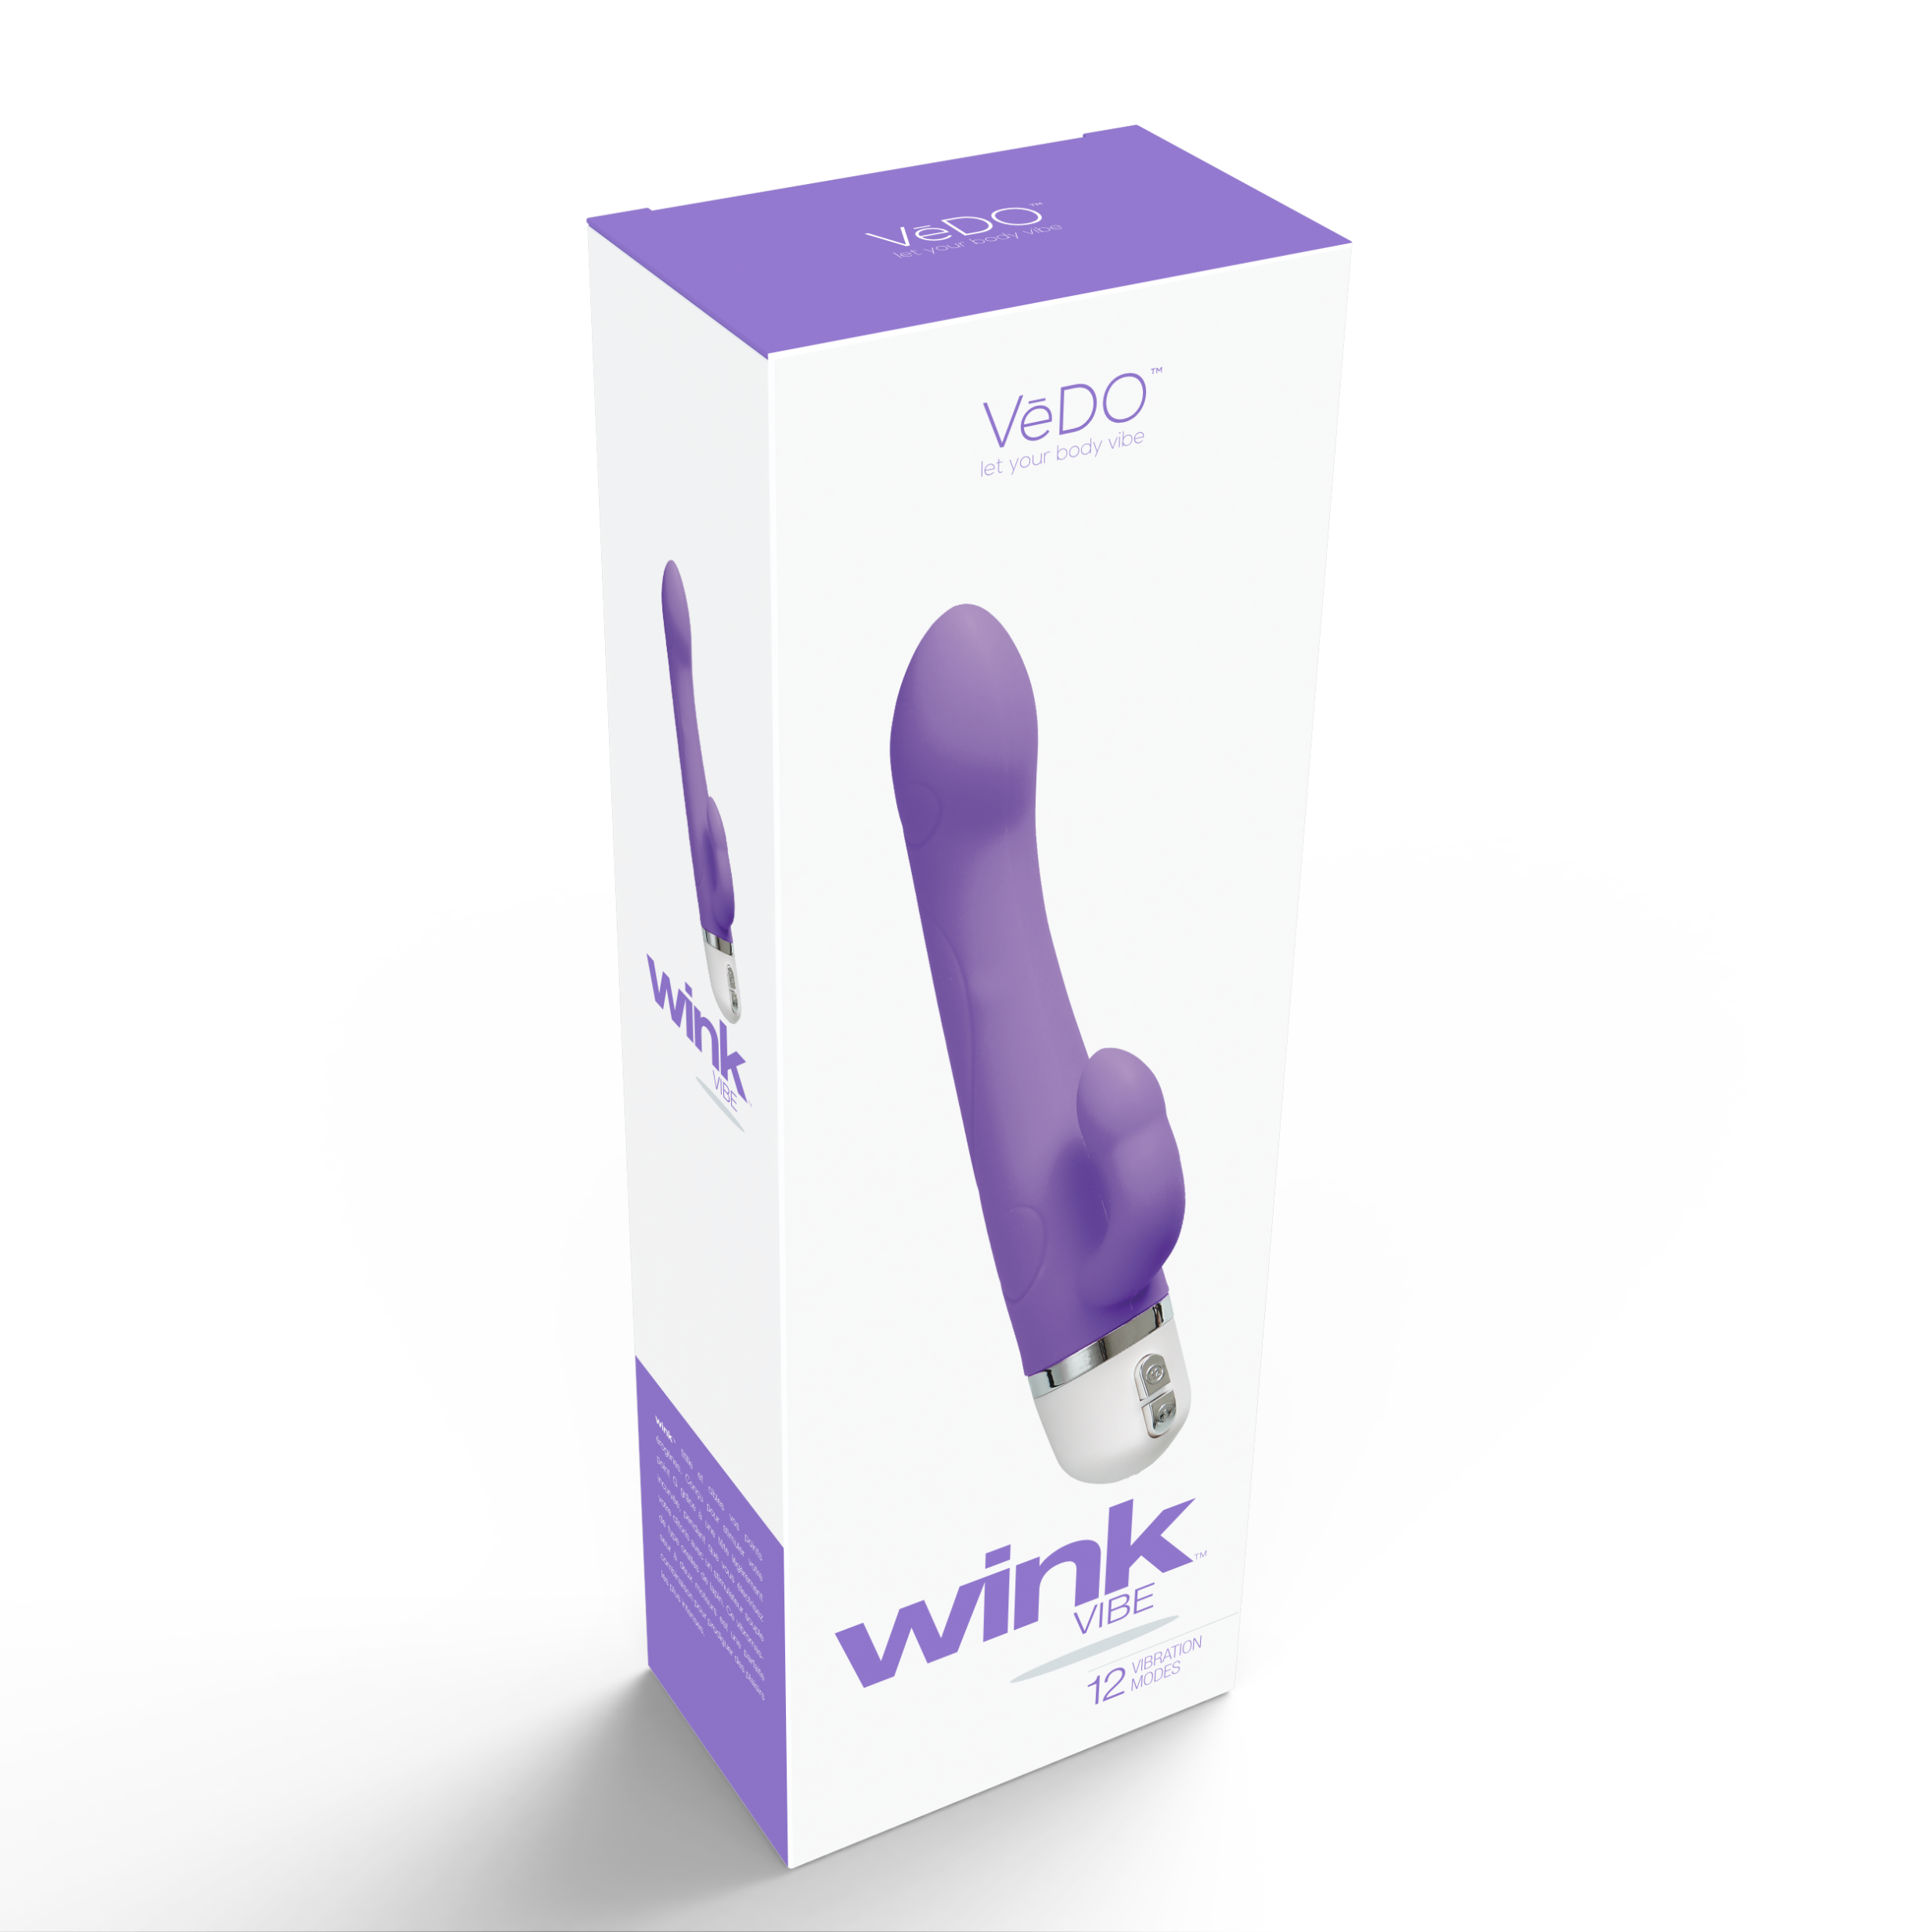 WINK G-Spot Vibrator - Experience Pure Ecstasy